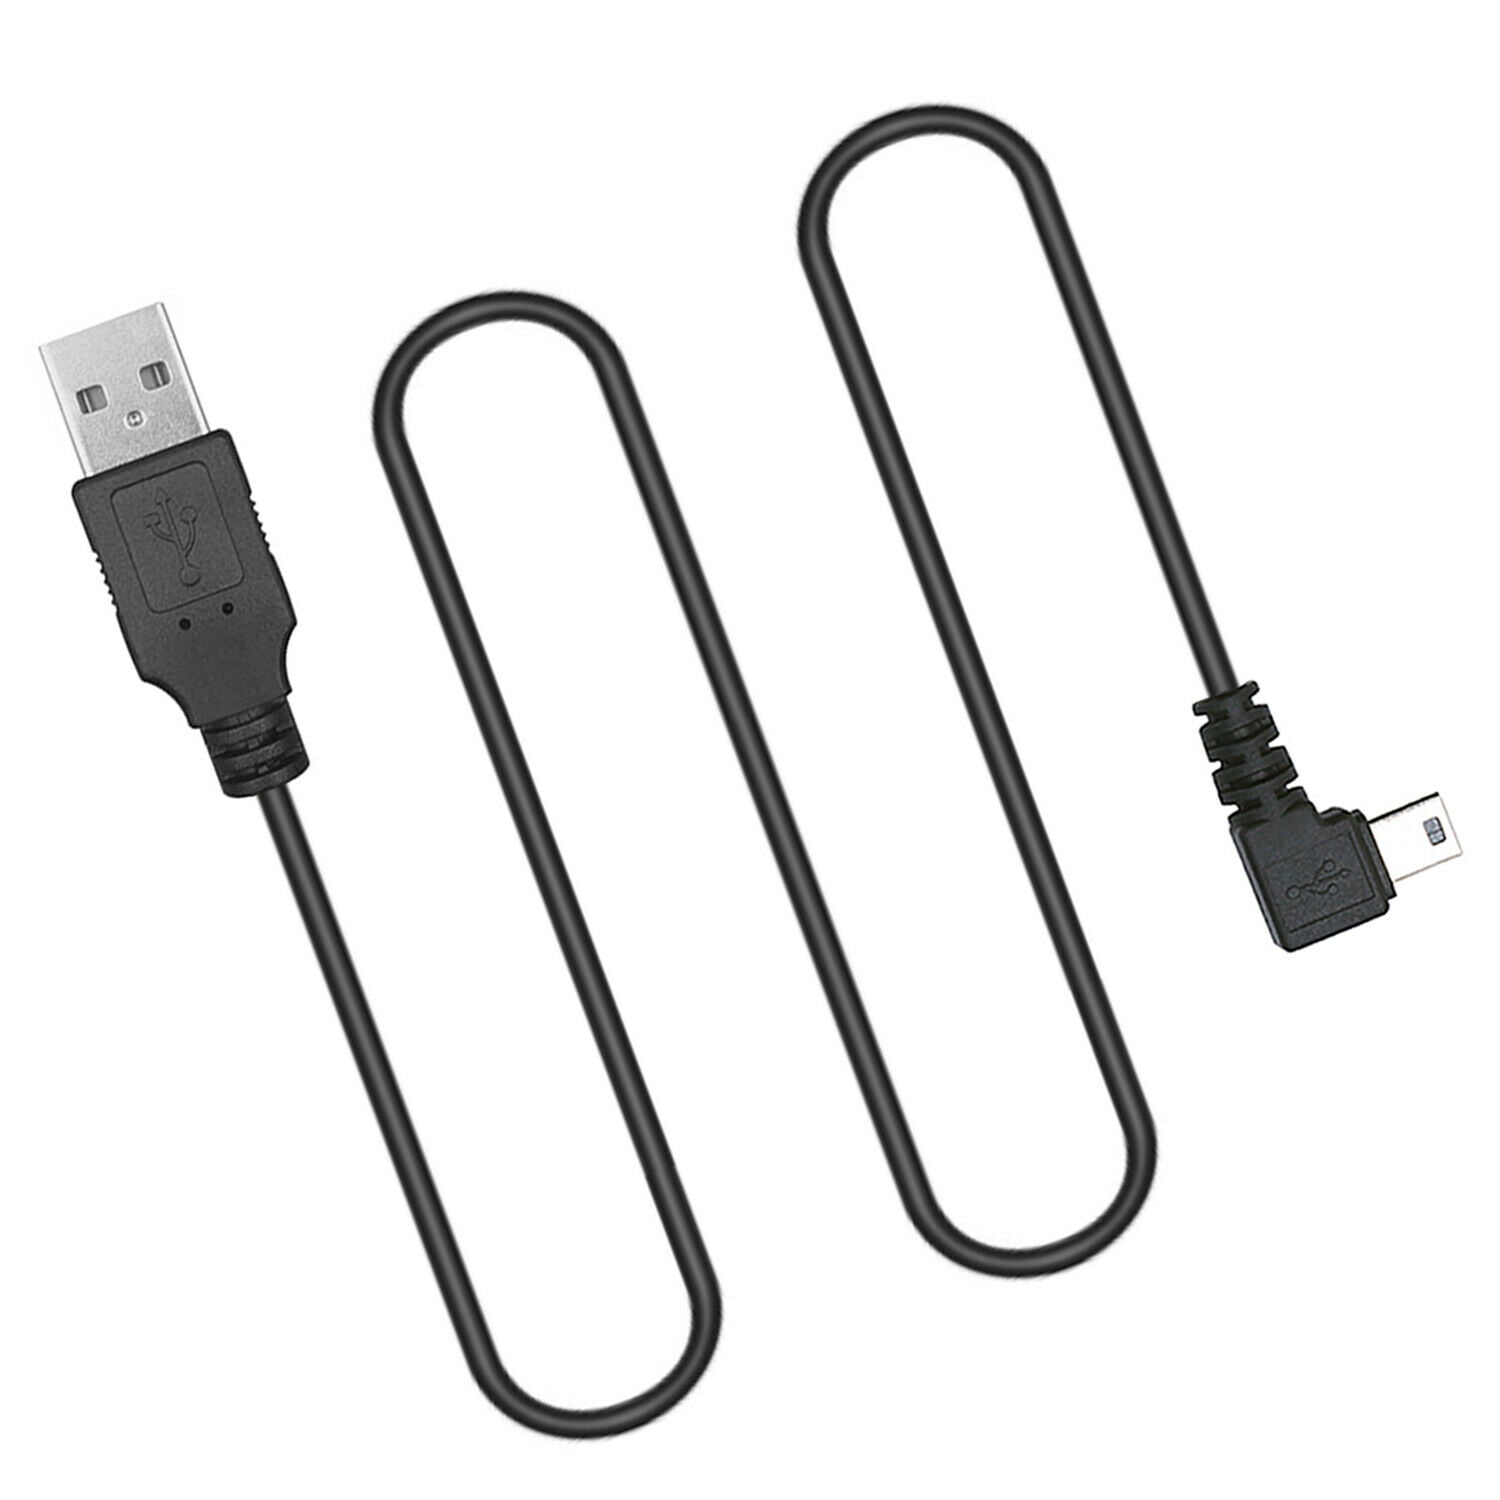 USB 2.0 PC GPS Cable for Garmin nuvi 255 255W 260 260W Mini USB Charger Cord 